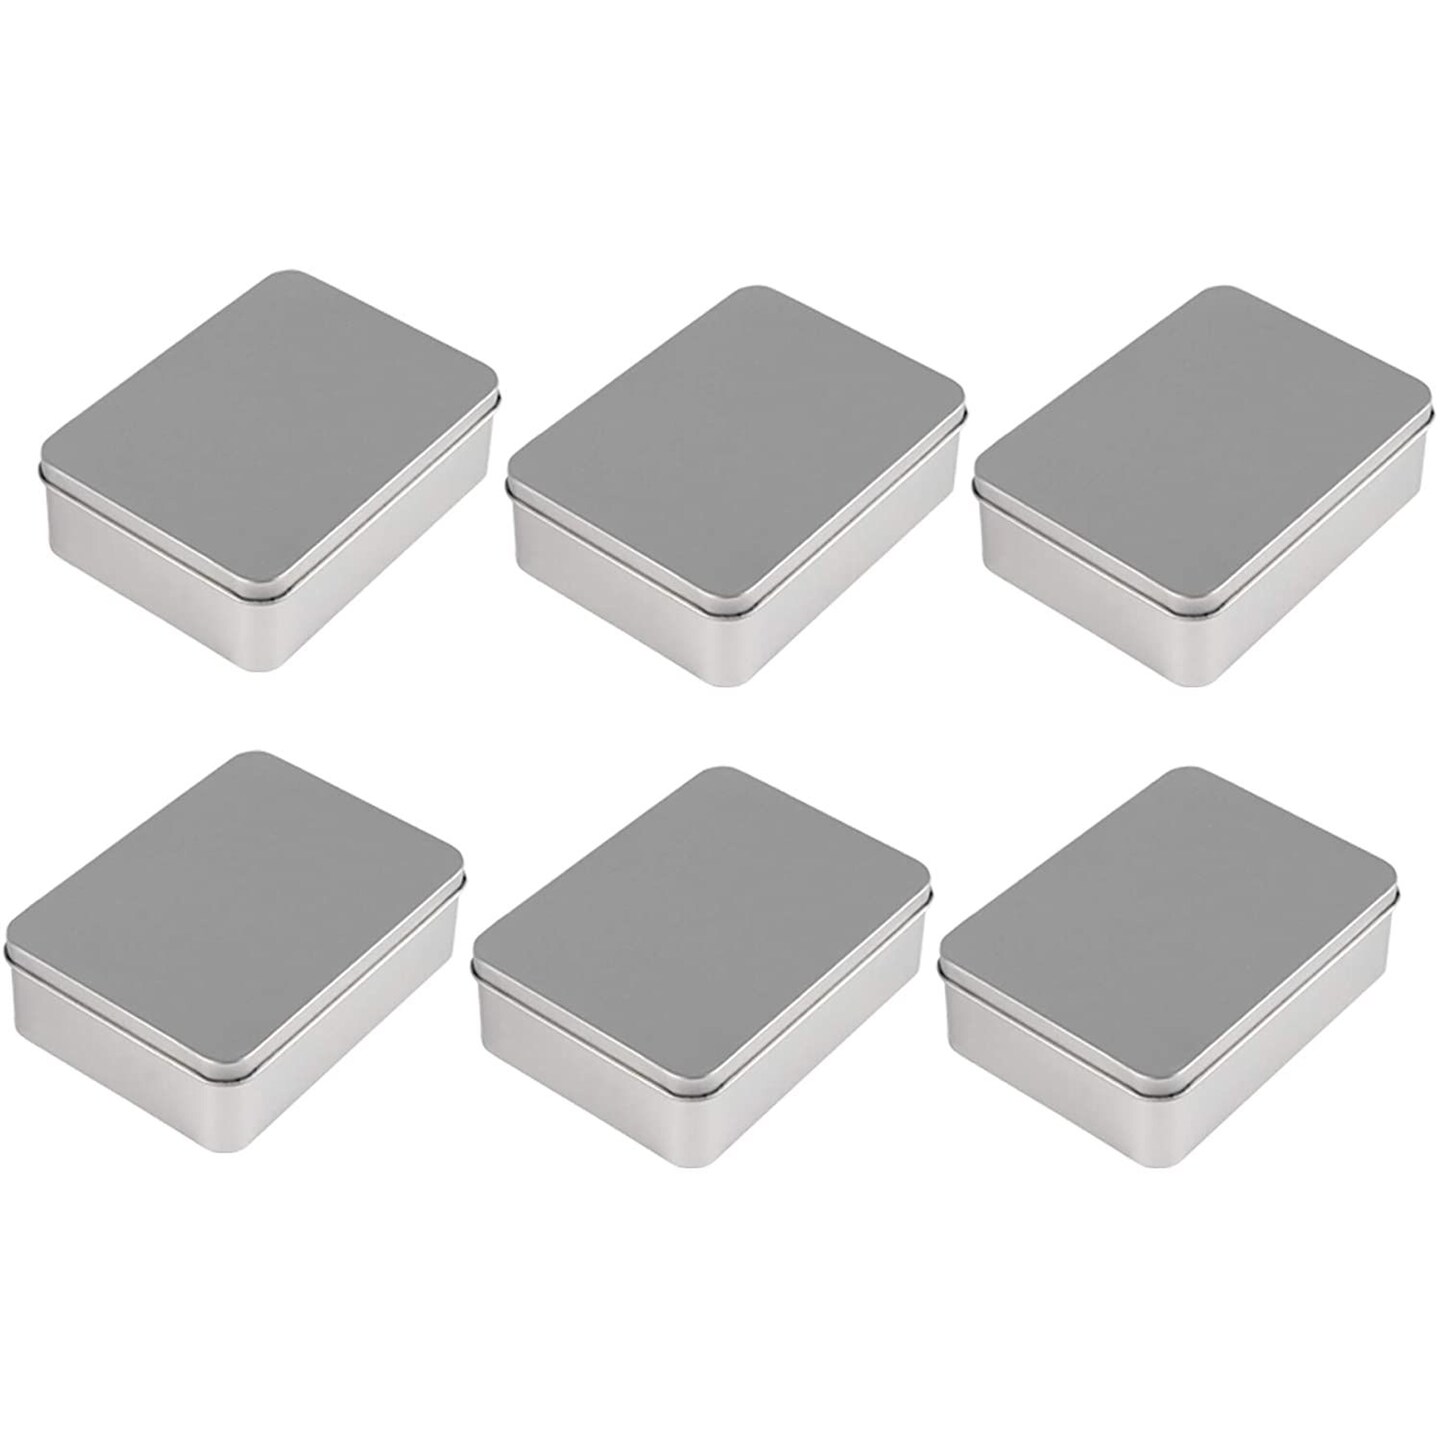 Mini Rectangular Boxes